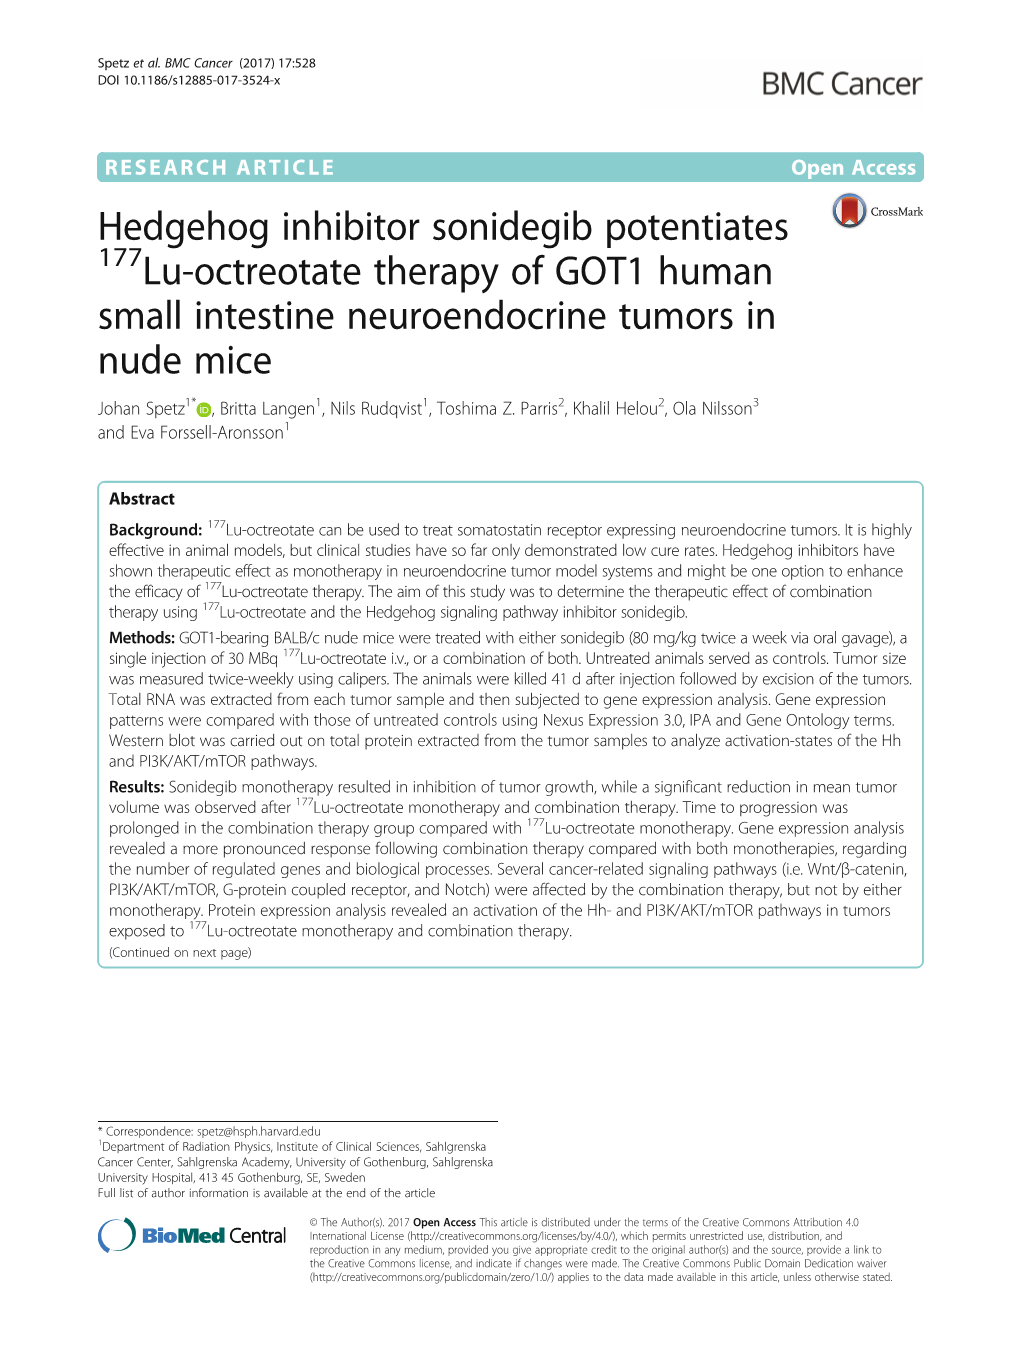 Hedgehog Inhibitor Sonidegib Potentiates 177Lu-Octreotate